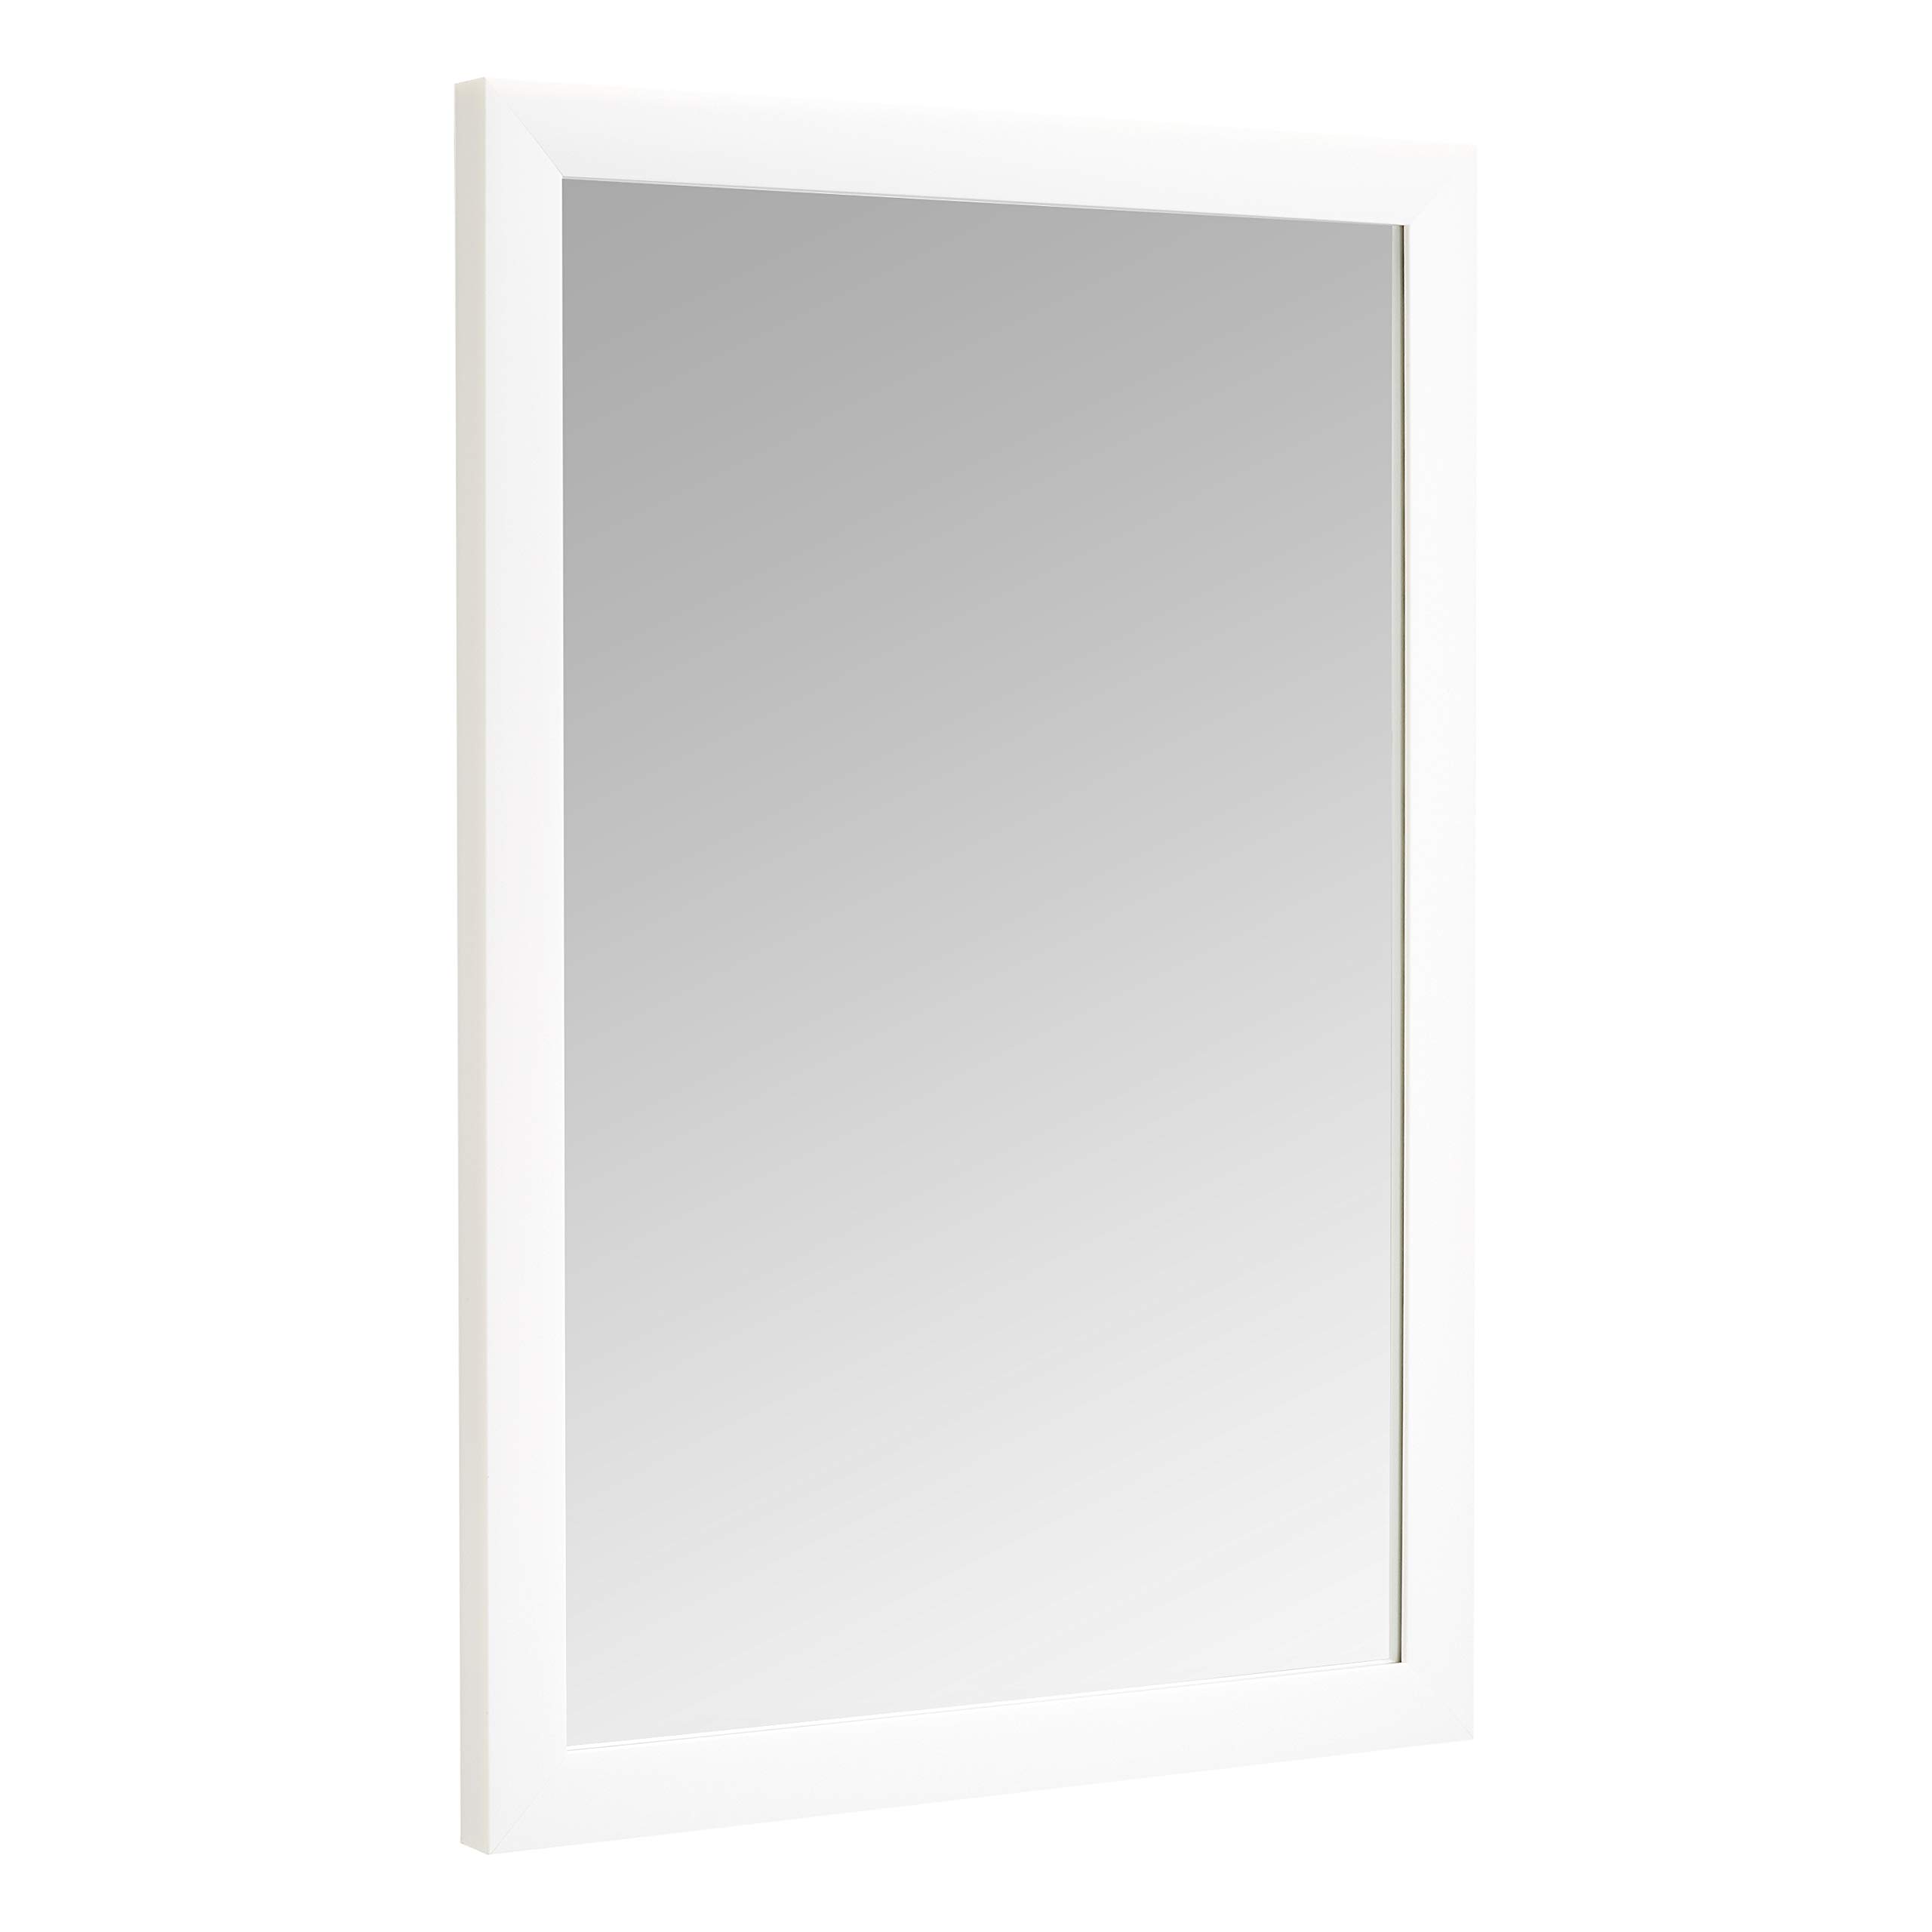 Basics Rectangular Wall Mirror Framed Standard Trim Modern Home Bathroom Wall Decor